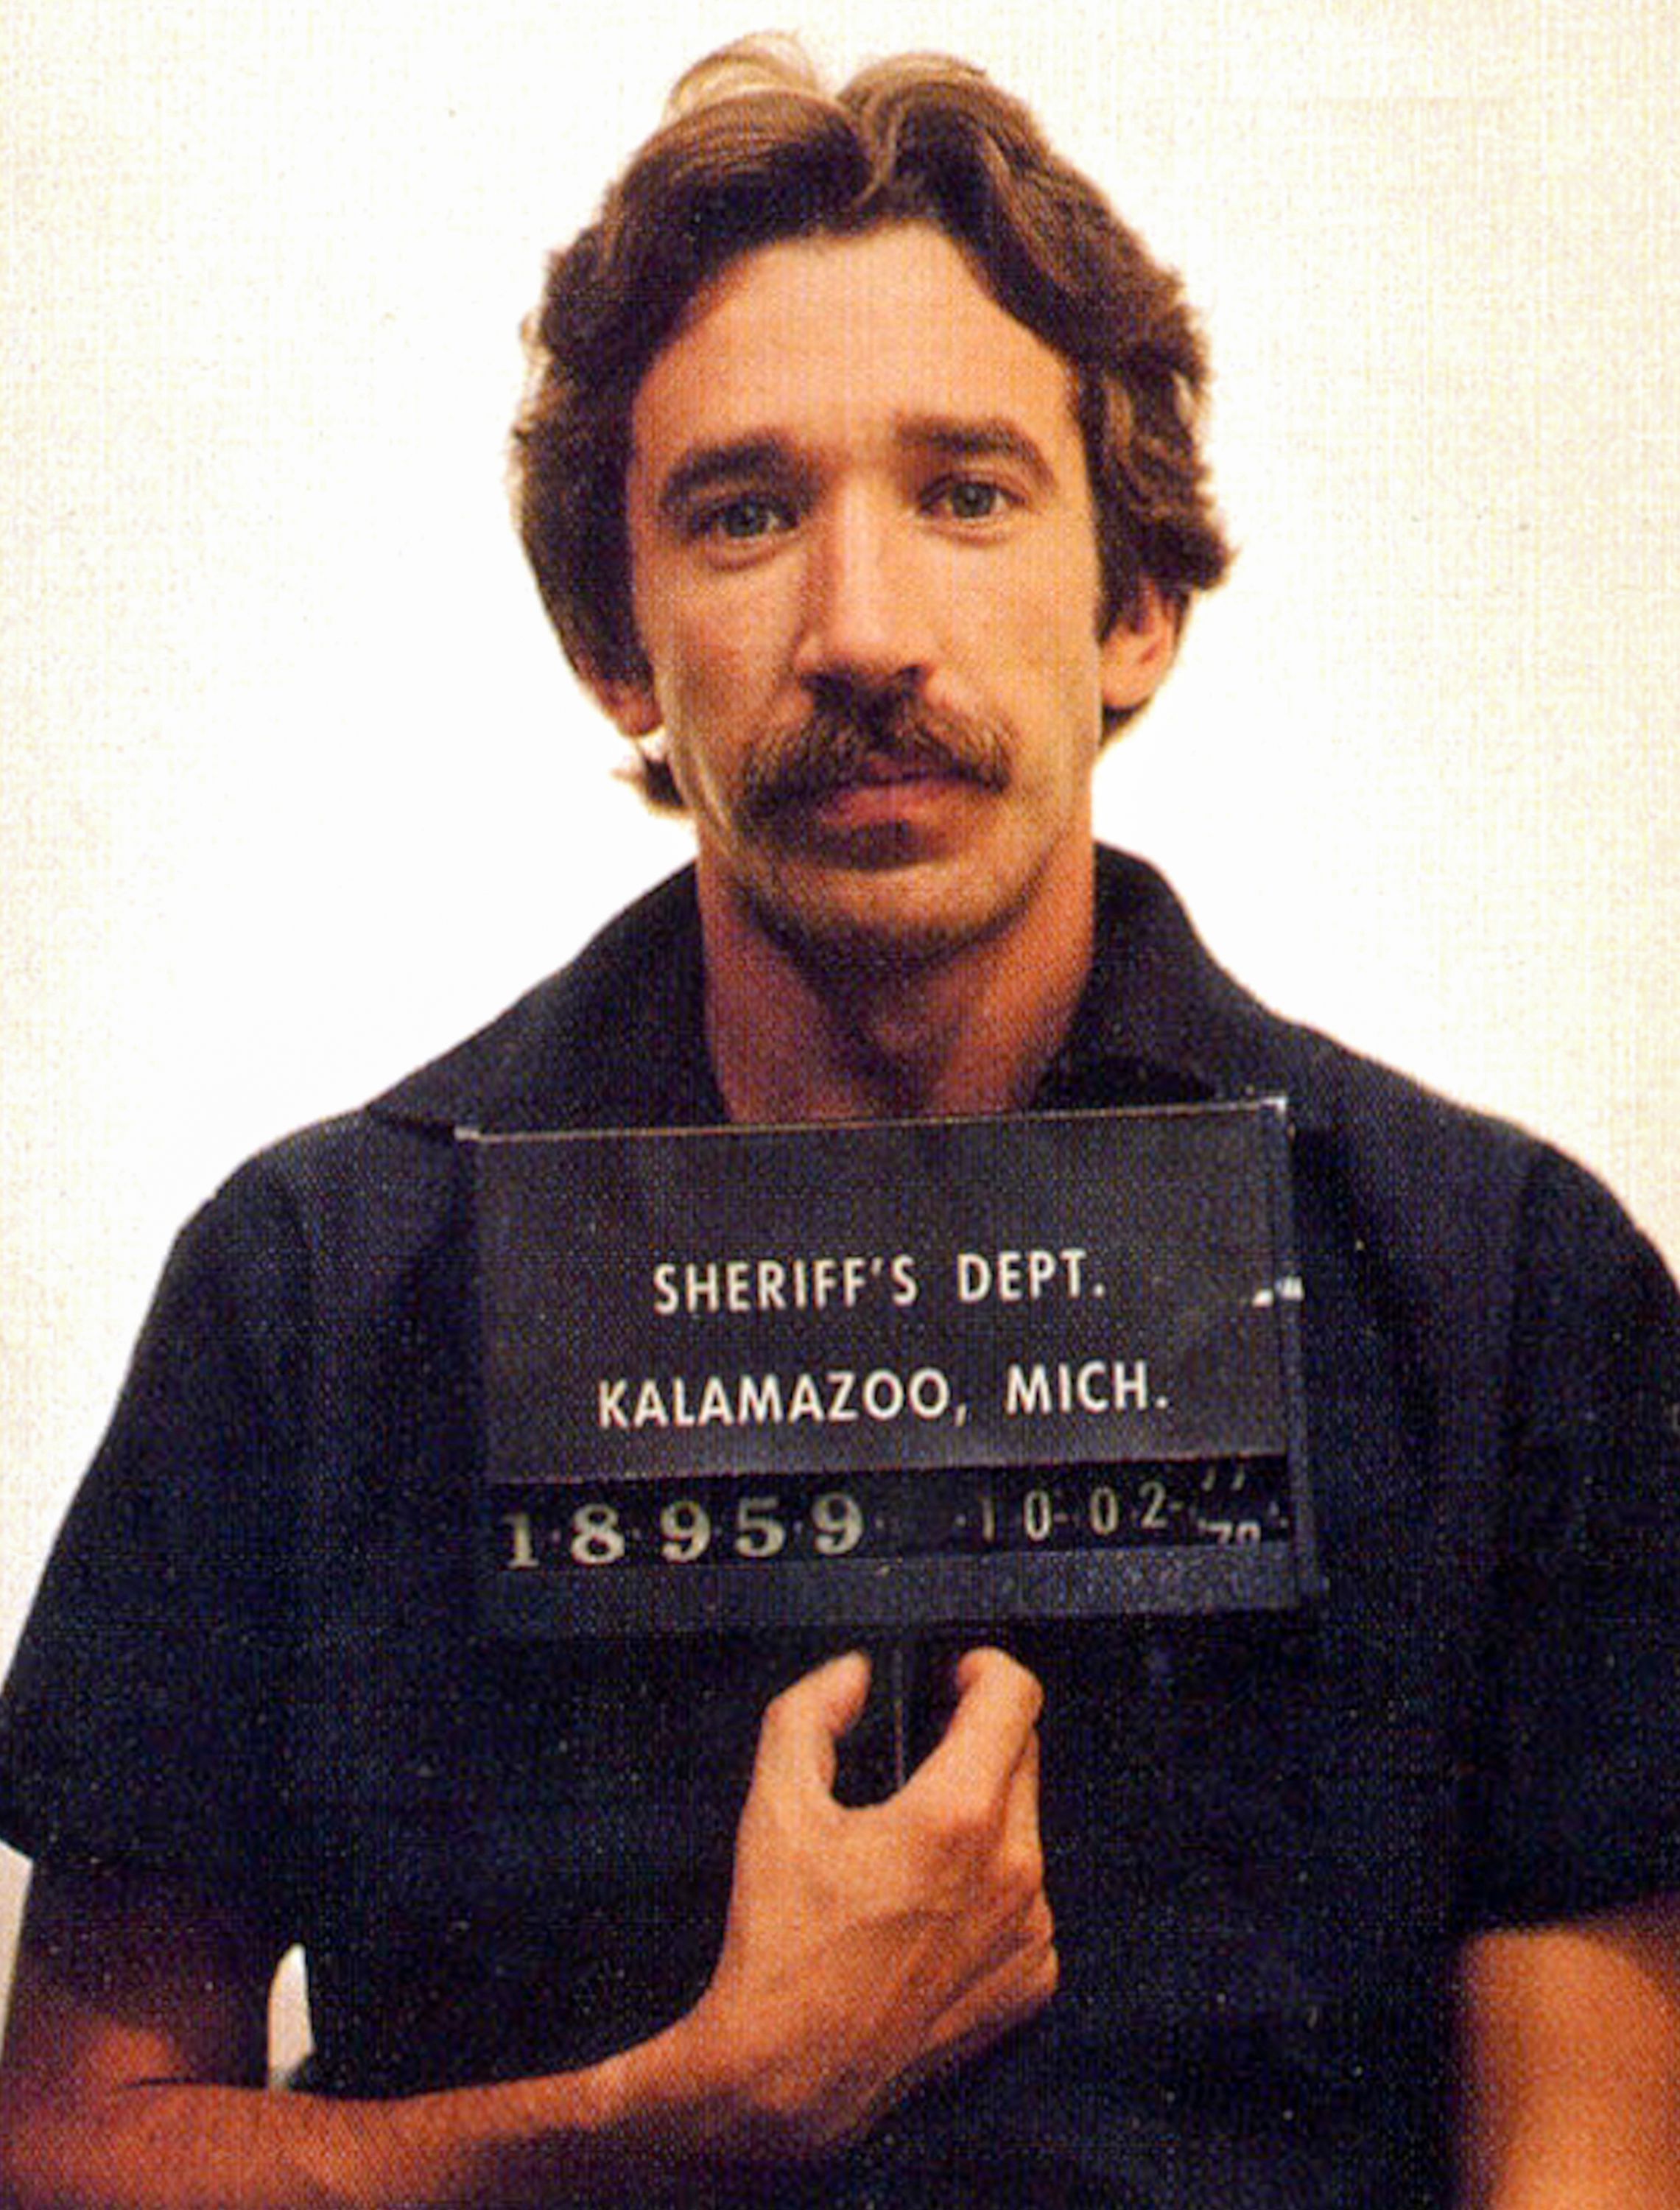 Tim Allen's mug shot following his arrest in Kalamazoo, Michigan, US, October 2, 1978. | Source: Getty Images